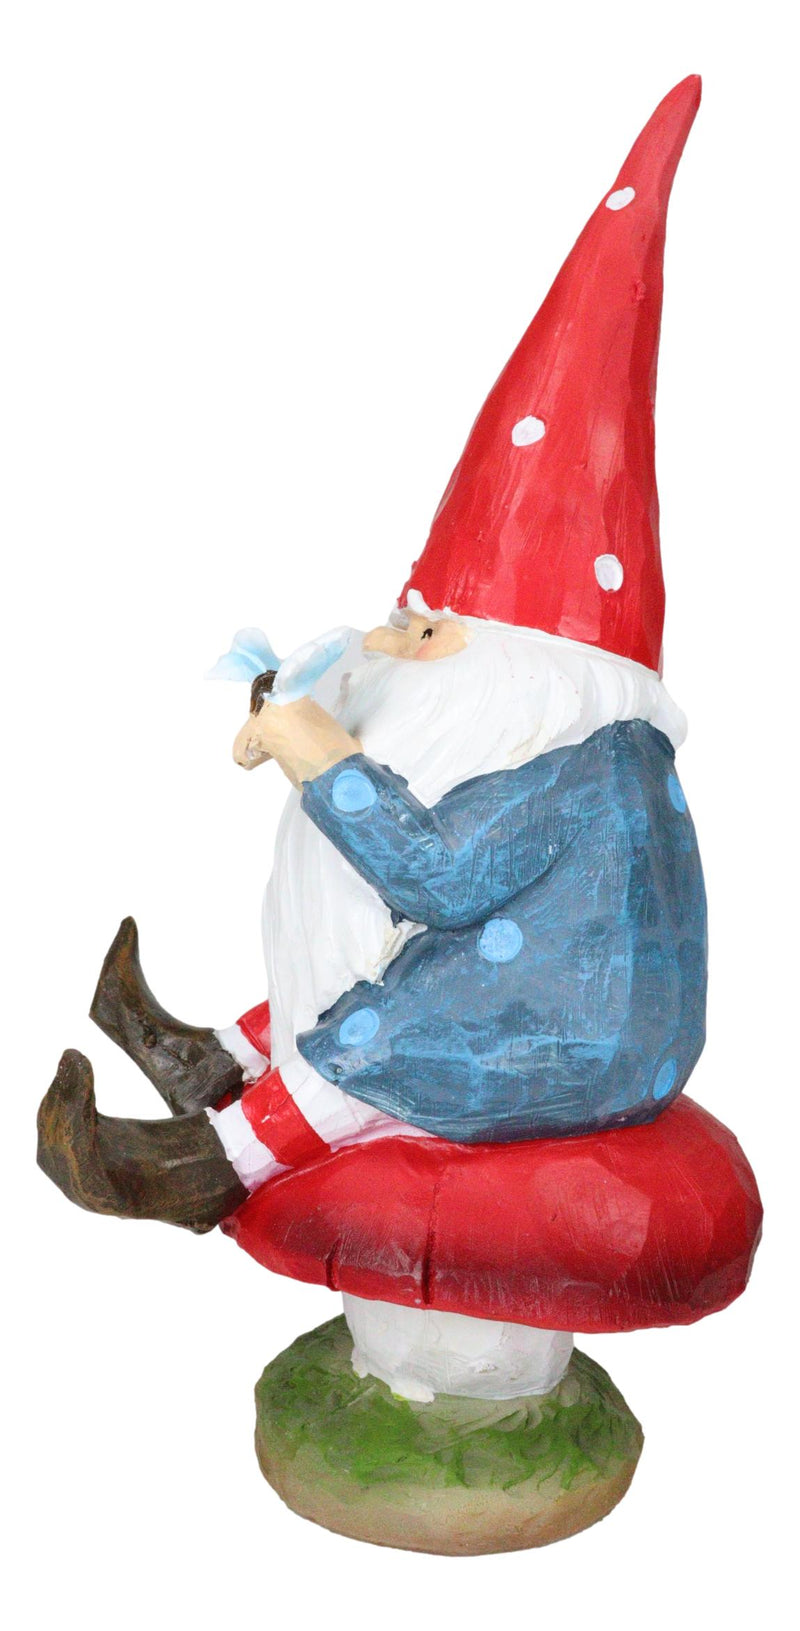 Camper Gnome Sitting On Toadstool Mushroom with A Bluebird Fairy Garden Figurine